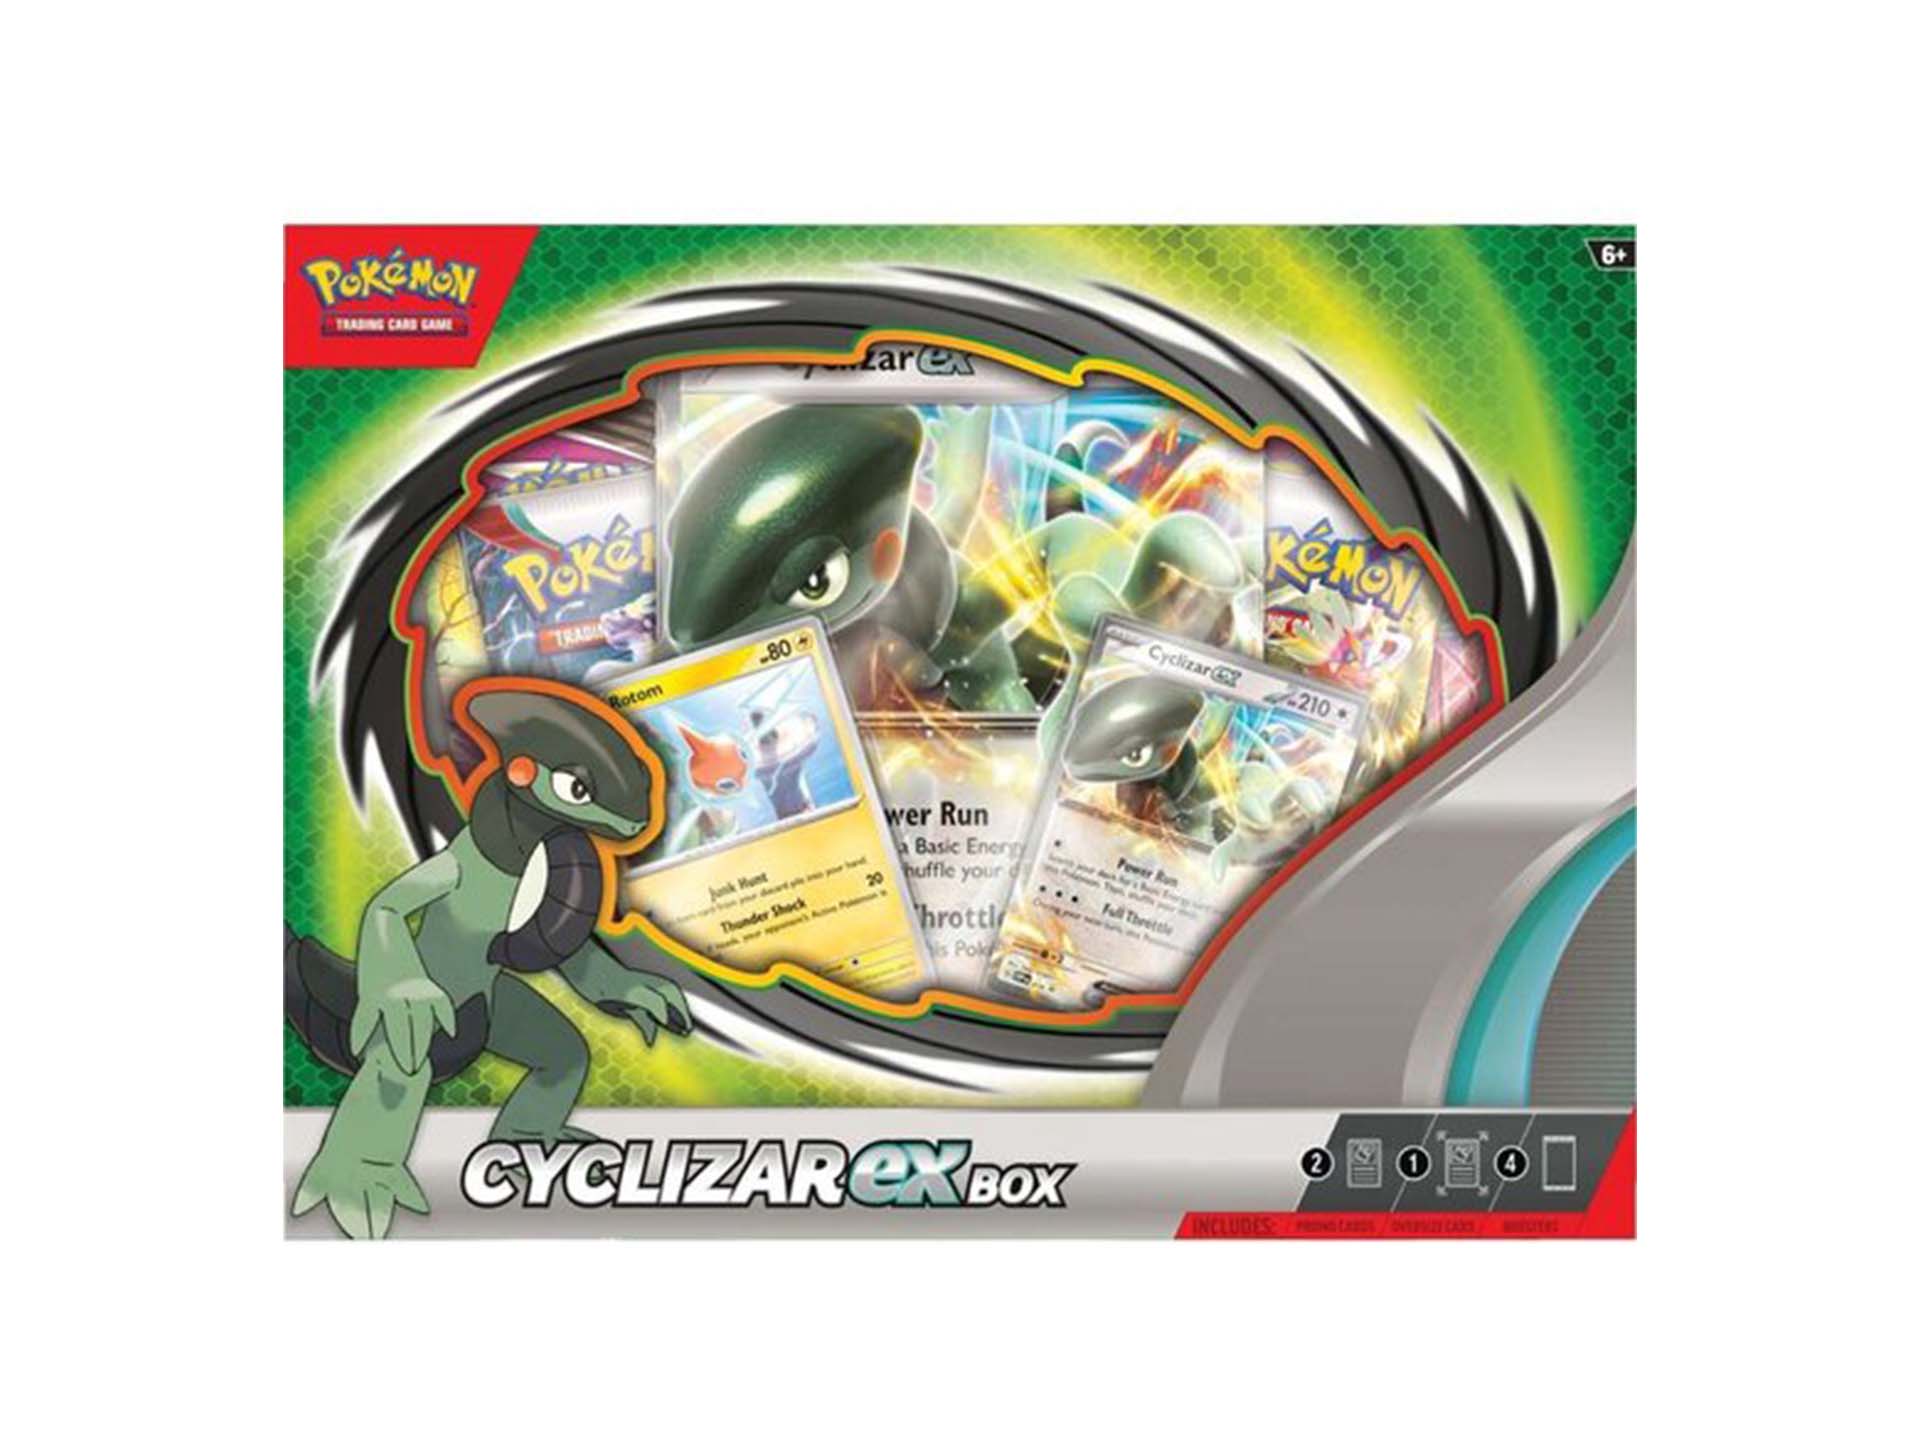 Pokémon Cyclizar EX box